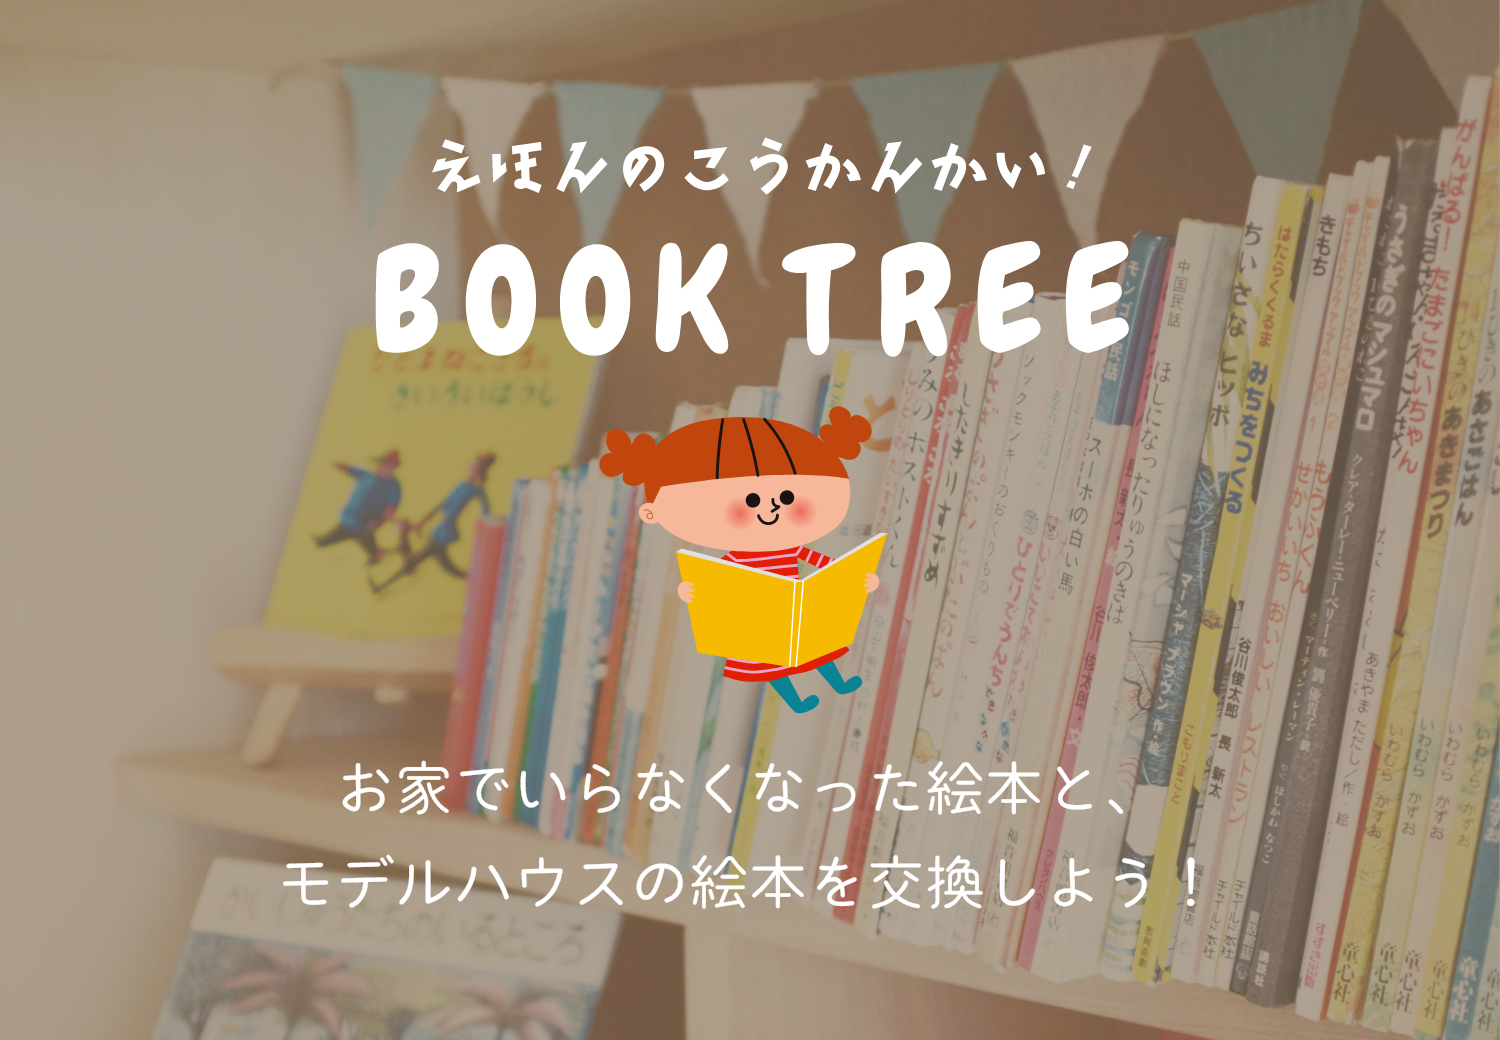 BOOK TREE